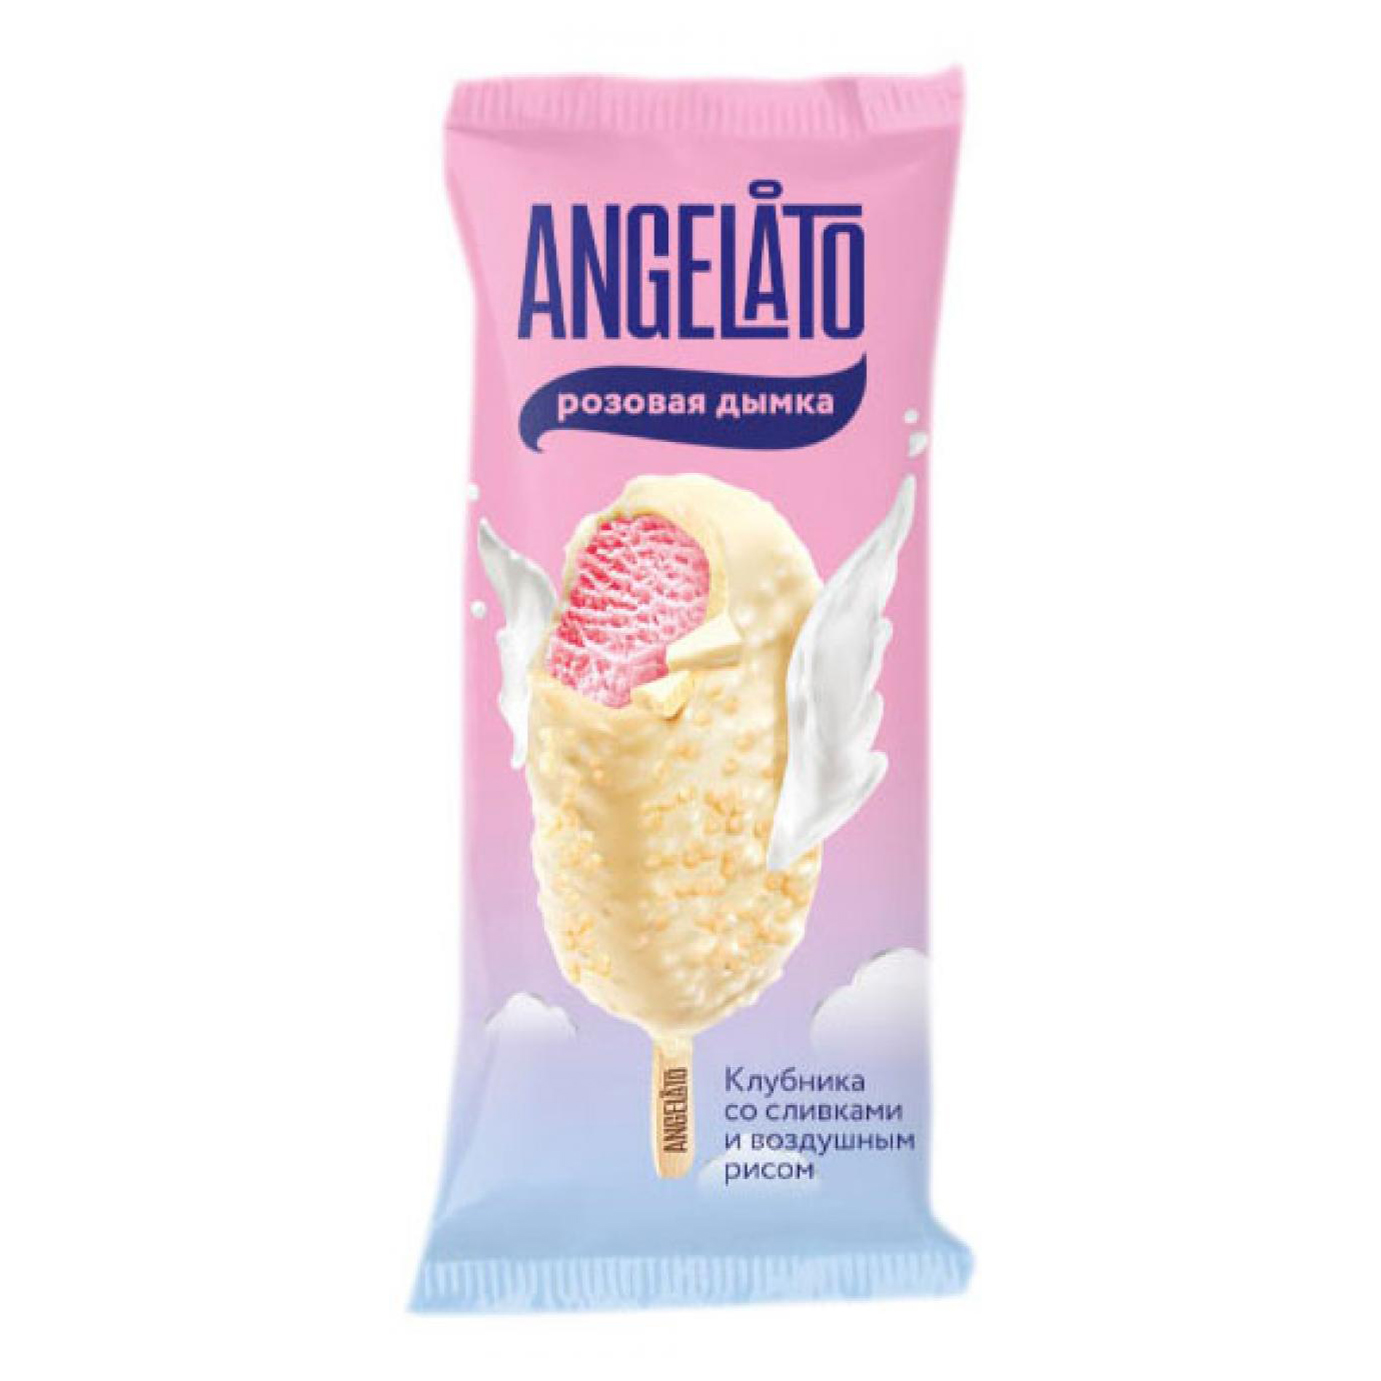 Мороженое сливочное Angelato со вкусом клубники со сливками в белой глазури СЗМЖ 70 г